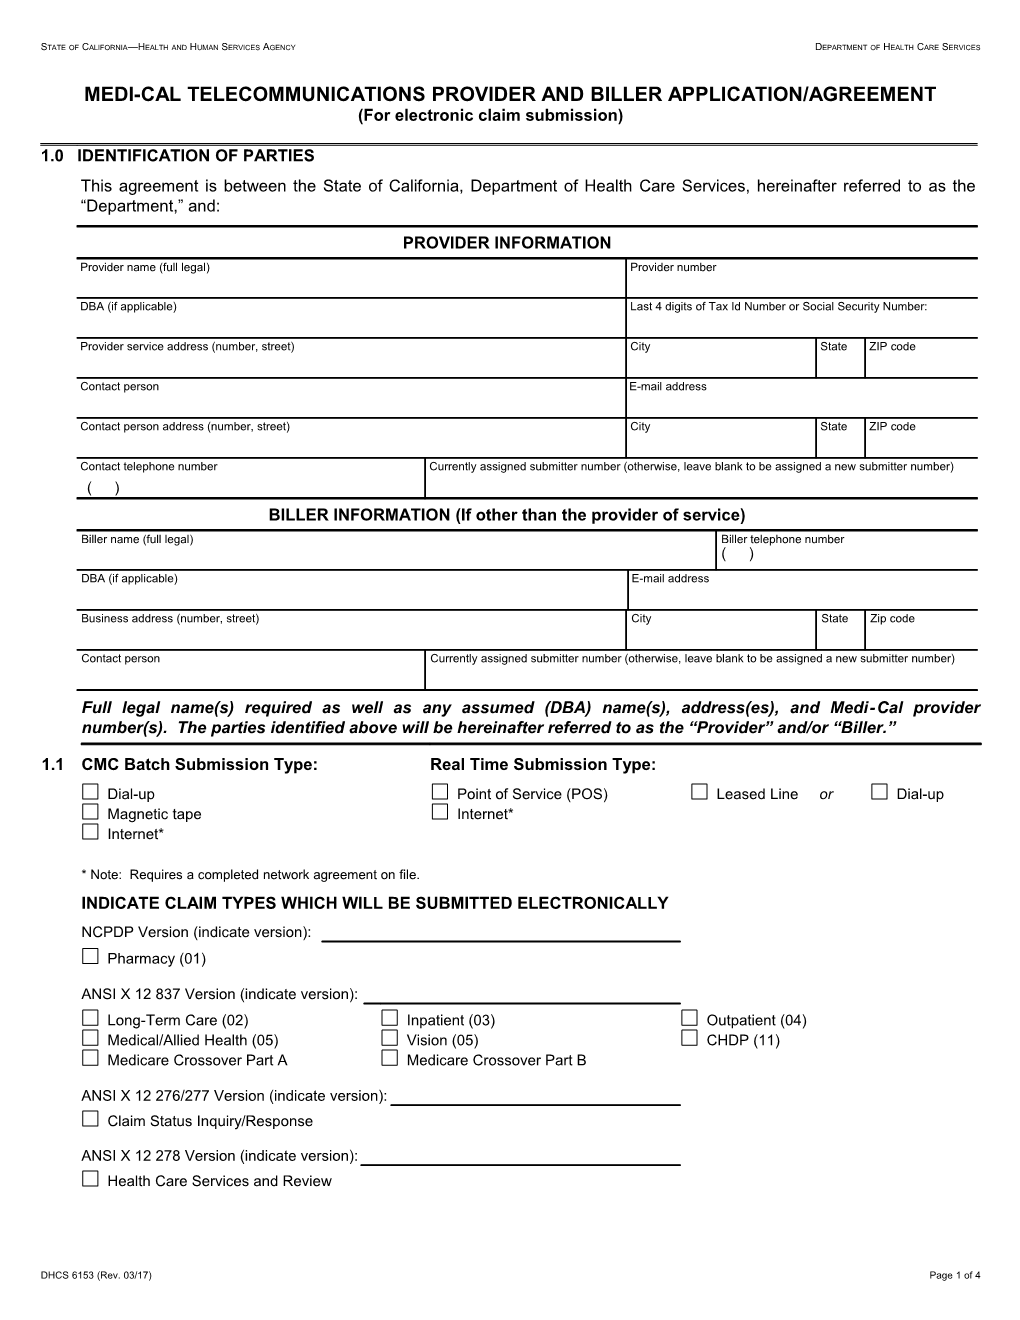 Form: Medi-Cal Telecommunications Provider and Biller Application/Agreement (Cmc Enroll